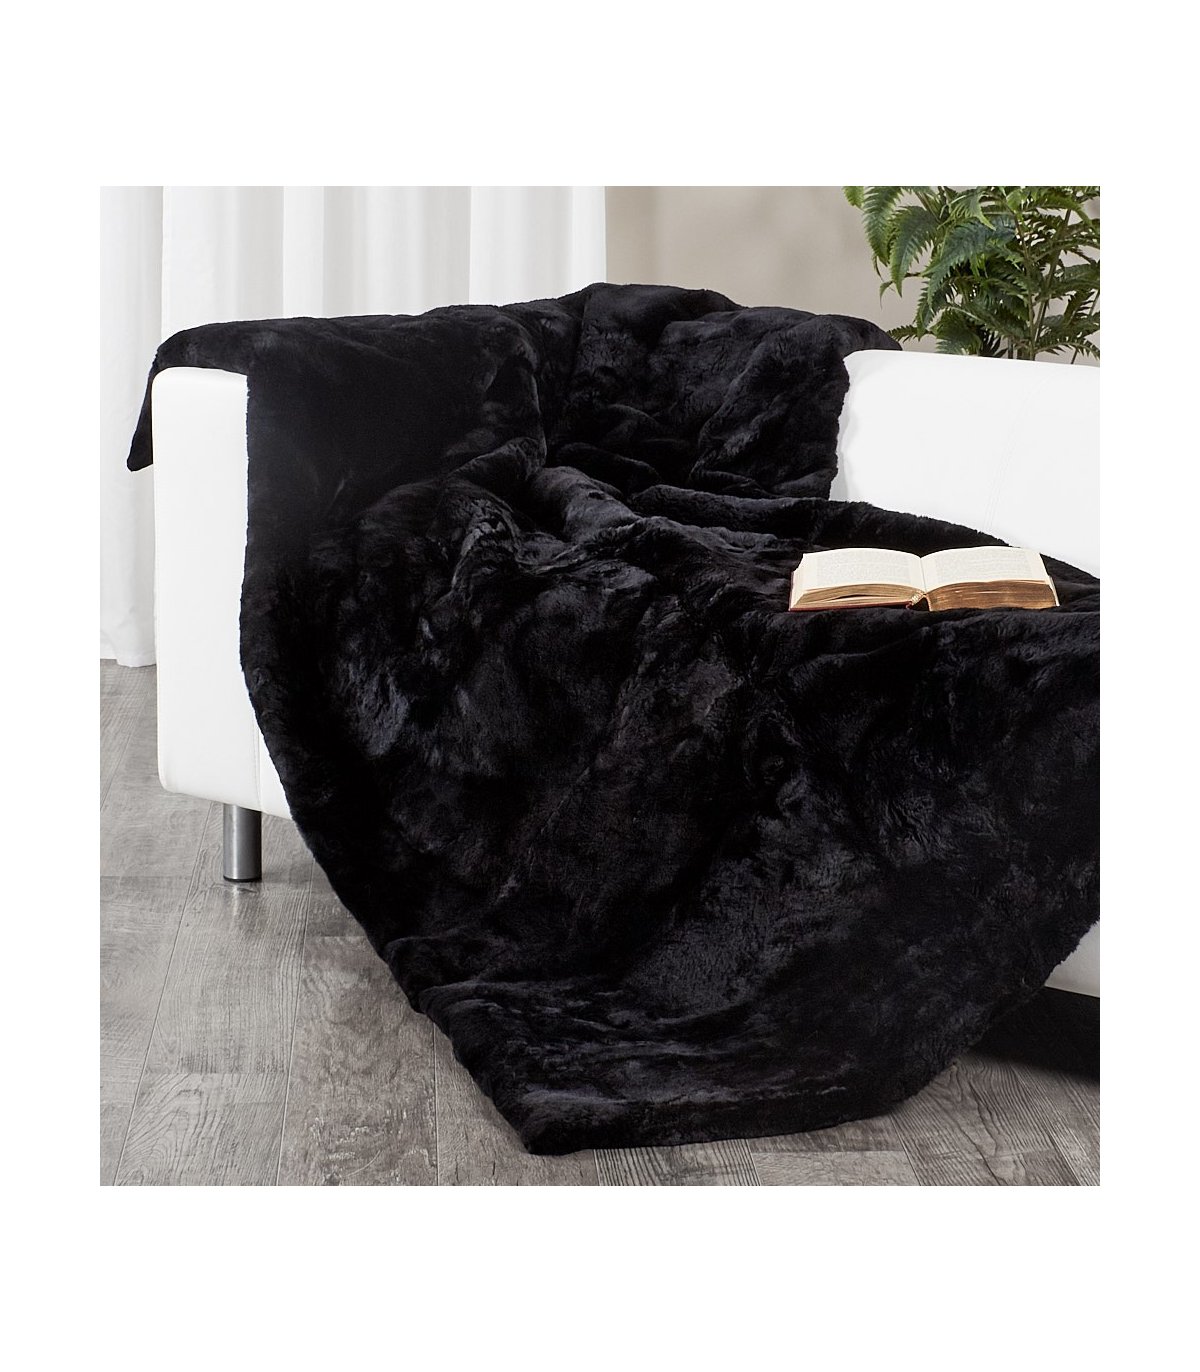 Black Sheared Beaver Fur Blanket for Luxurious Home Decor at FurSource.com